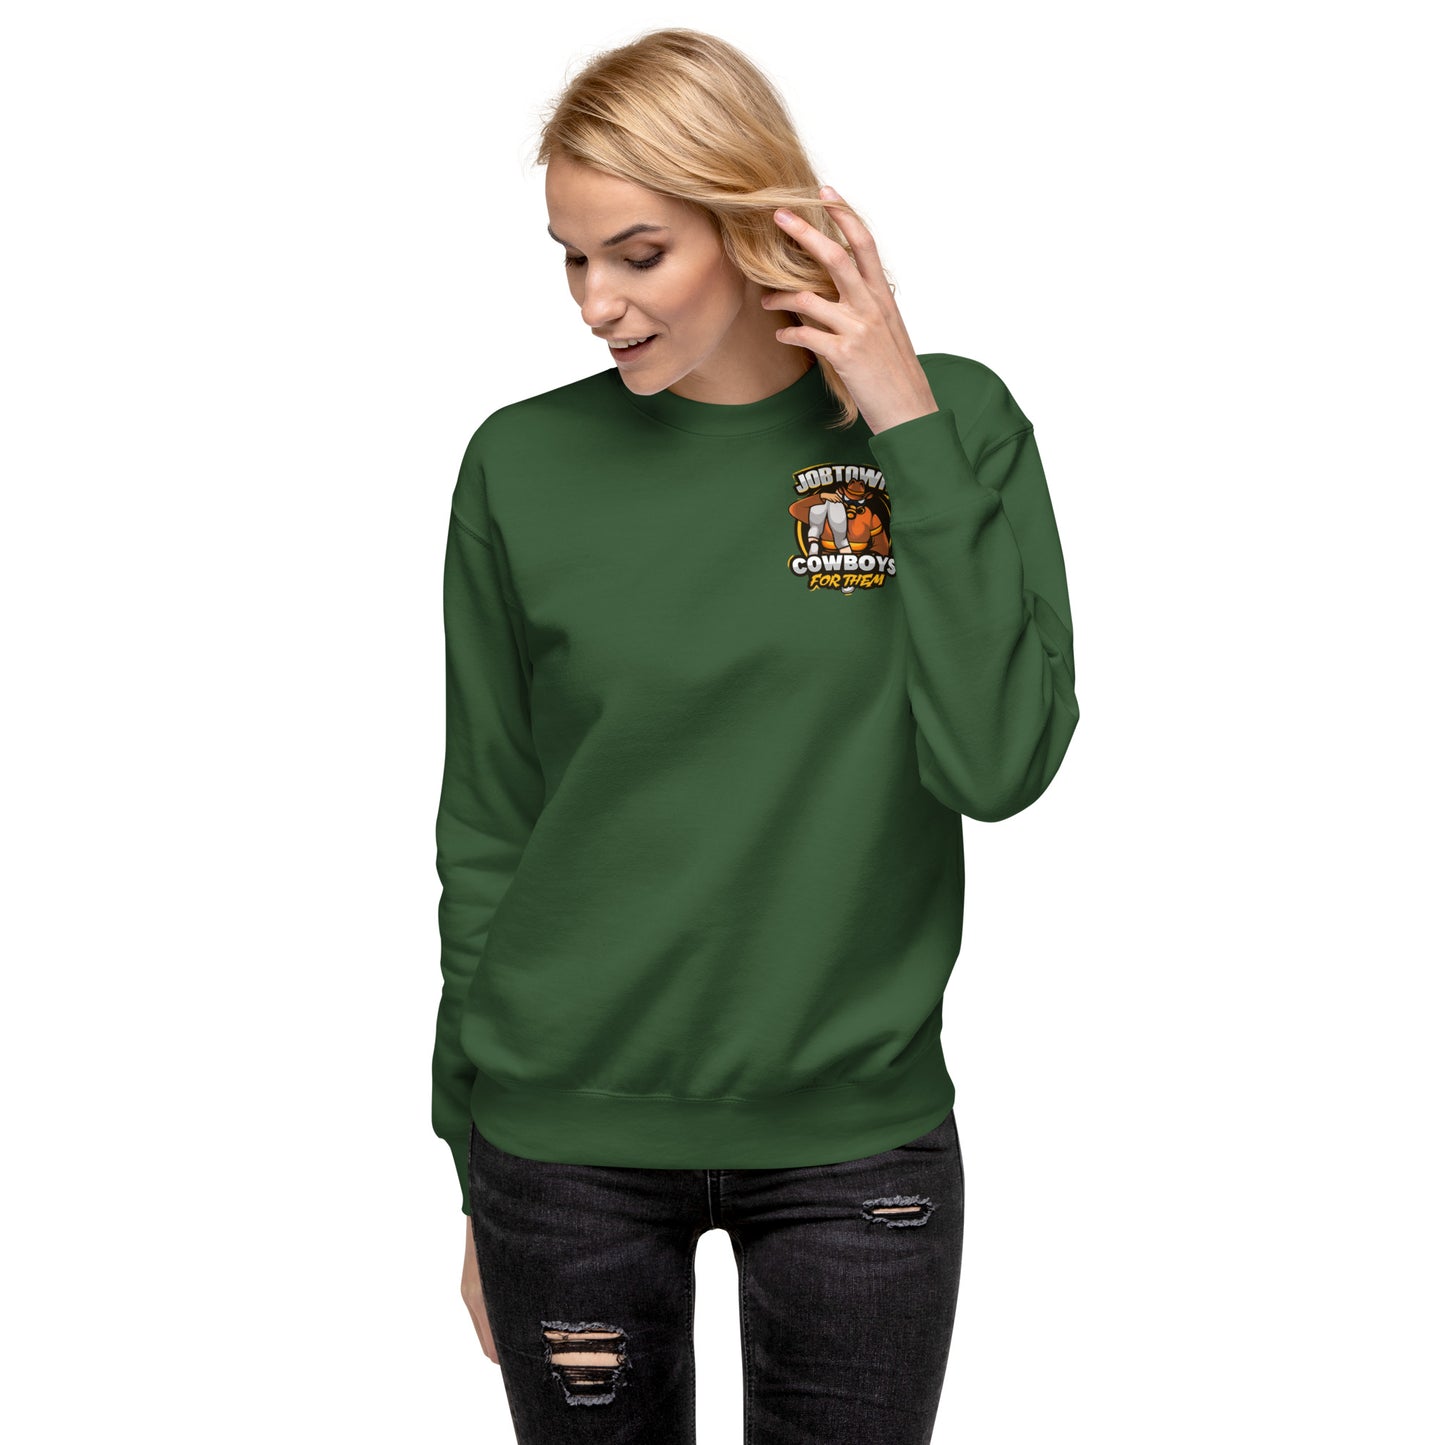 Jobtown Cowboys Firefighter - For Them Unisex Premium Sweatshirt